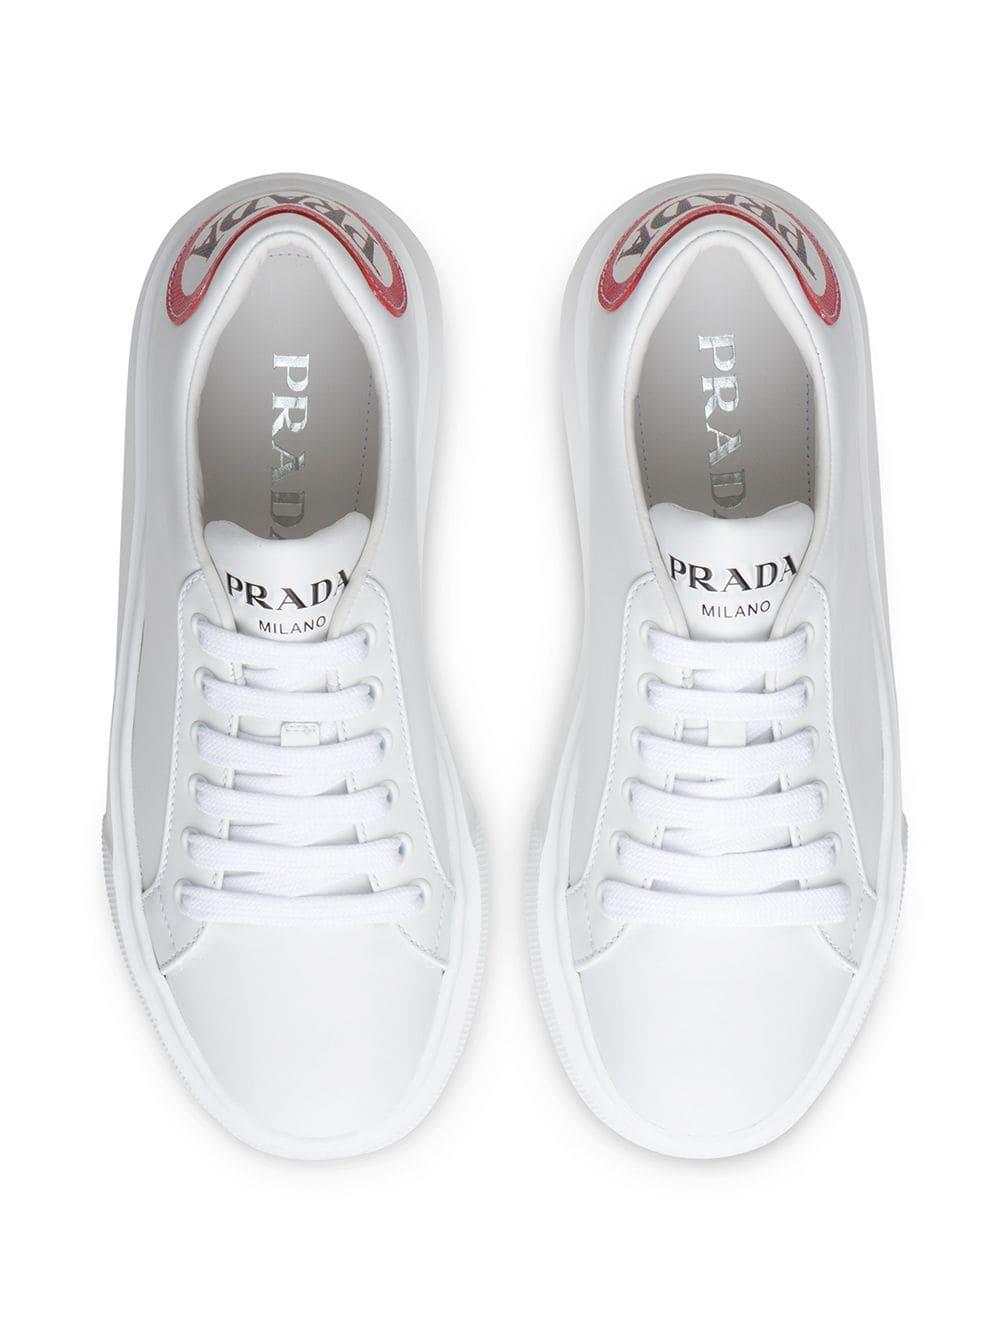 Prada Heart-shaped Sneakers in White | Lyst